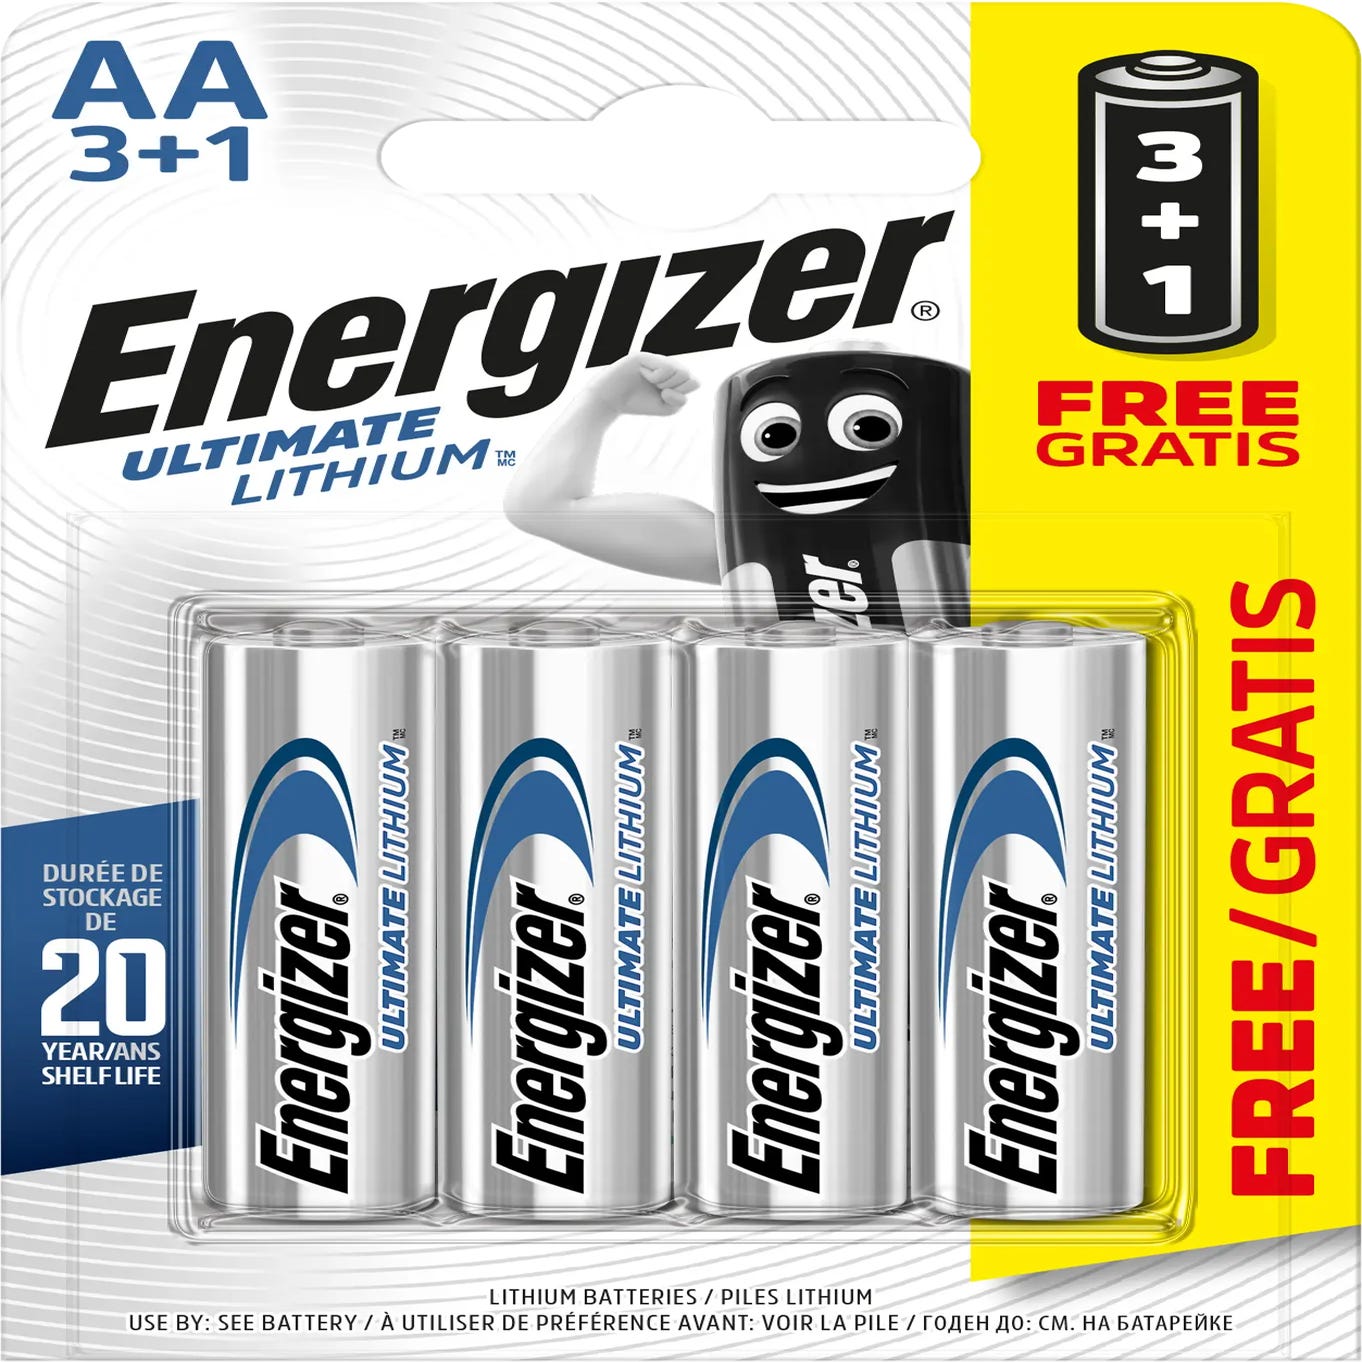 Energizer Pilhas AA, bateria Ultimate de lítio dupla A, 4 unidades